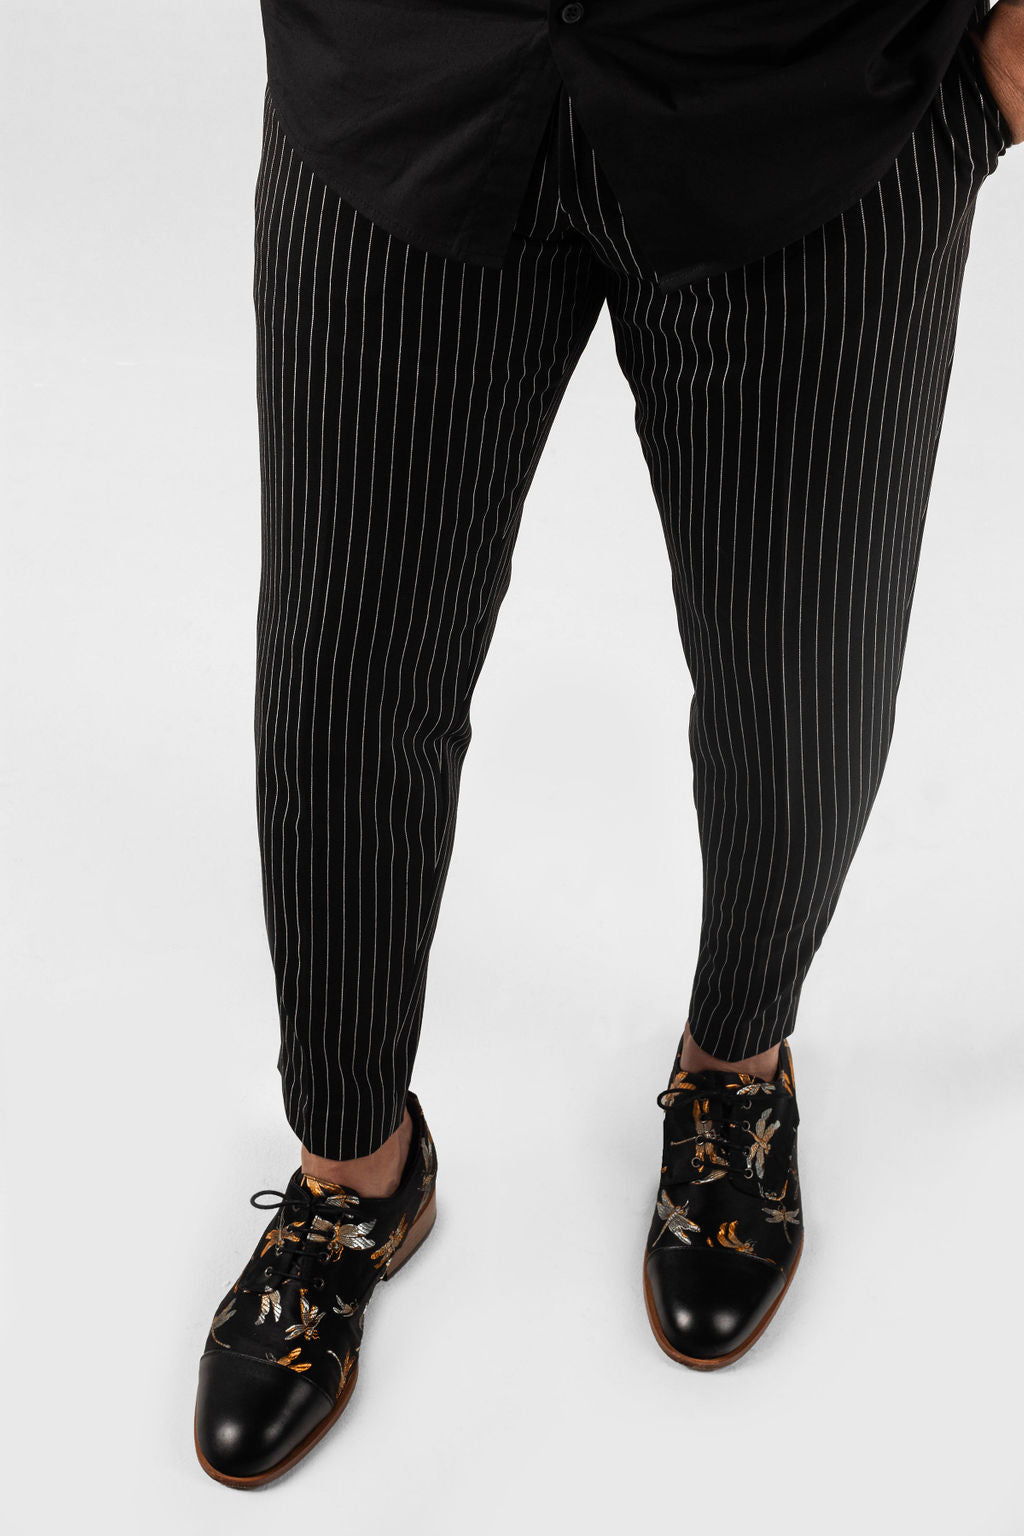 Garcelle Beauvais' Black and White Striped Pants | Big Blonde Hair